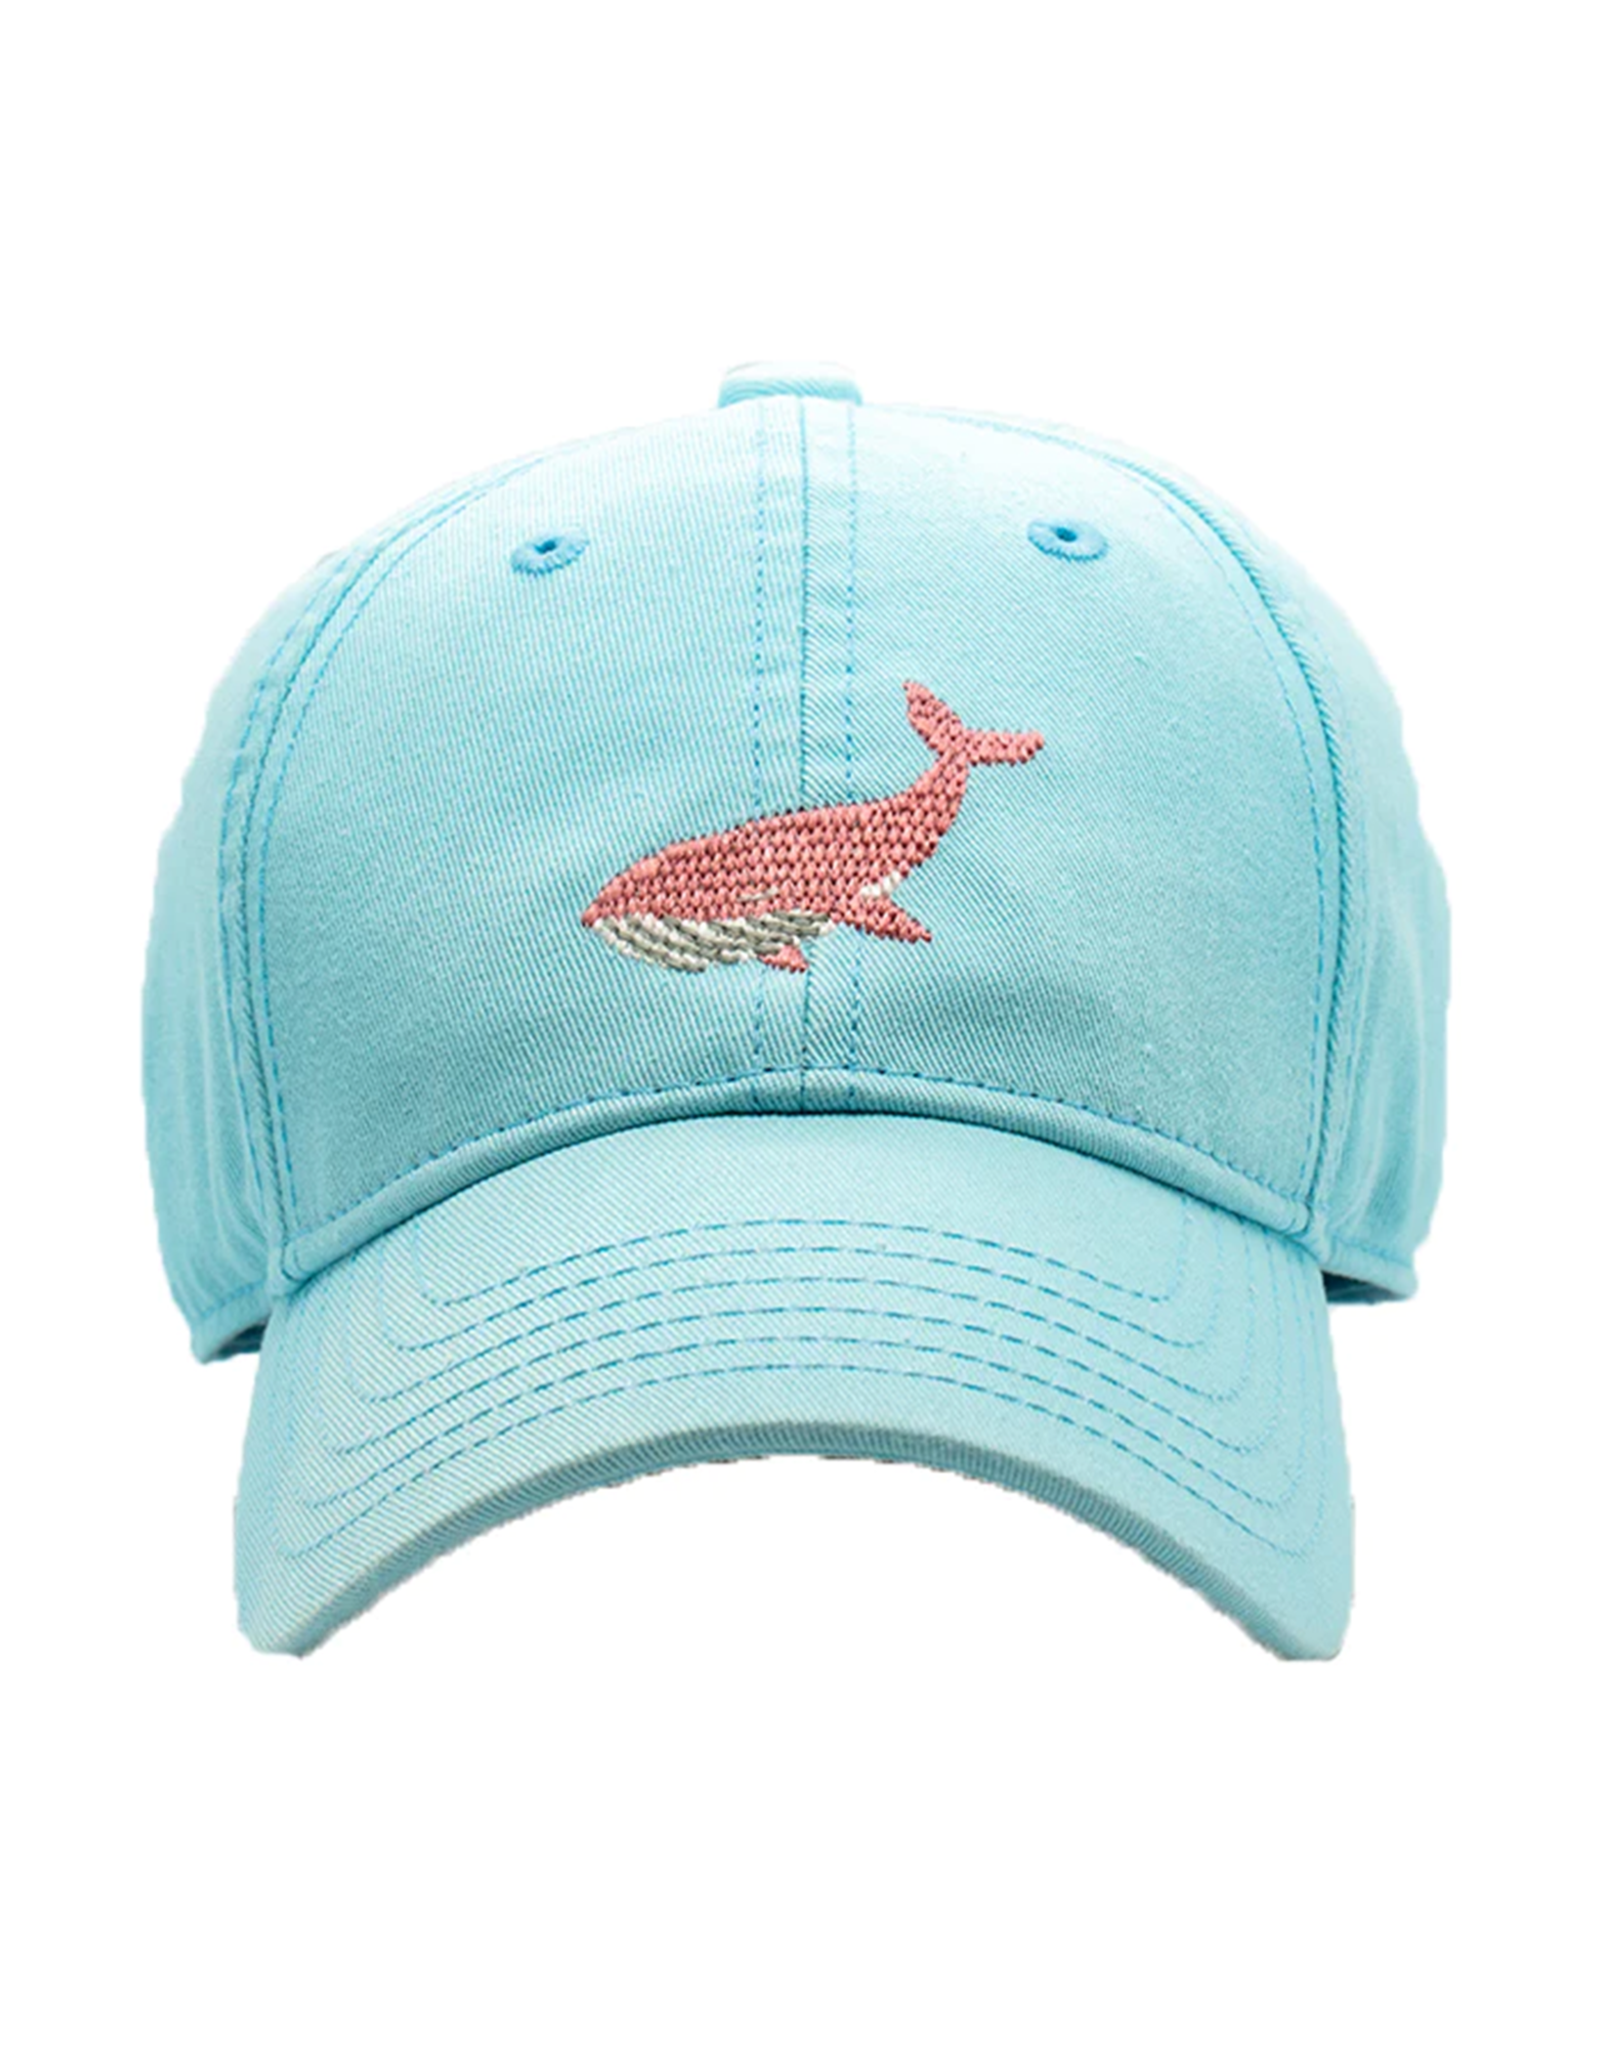 Harding Lane HL Embroidered Hat Aqua Whale